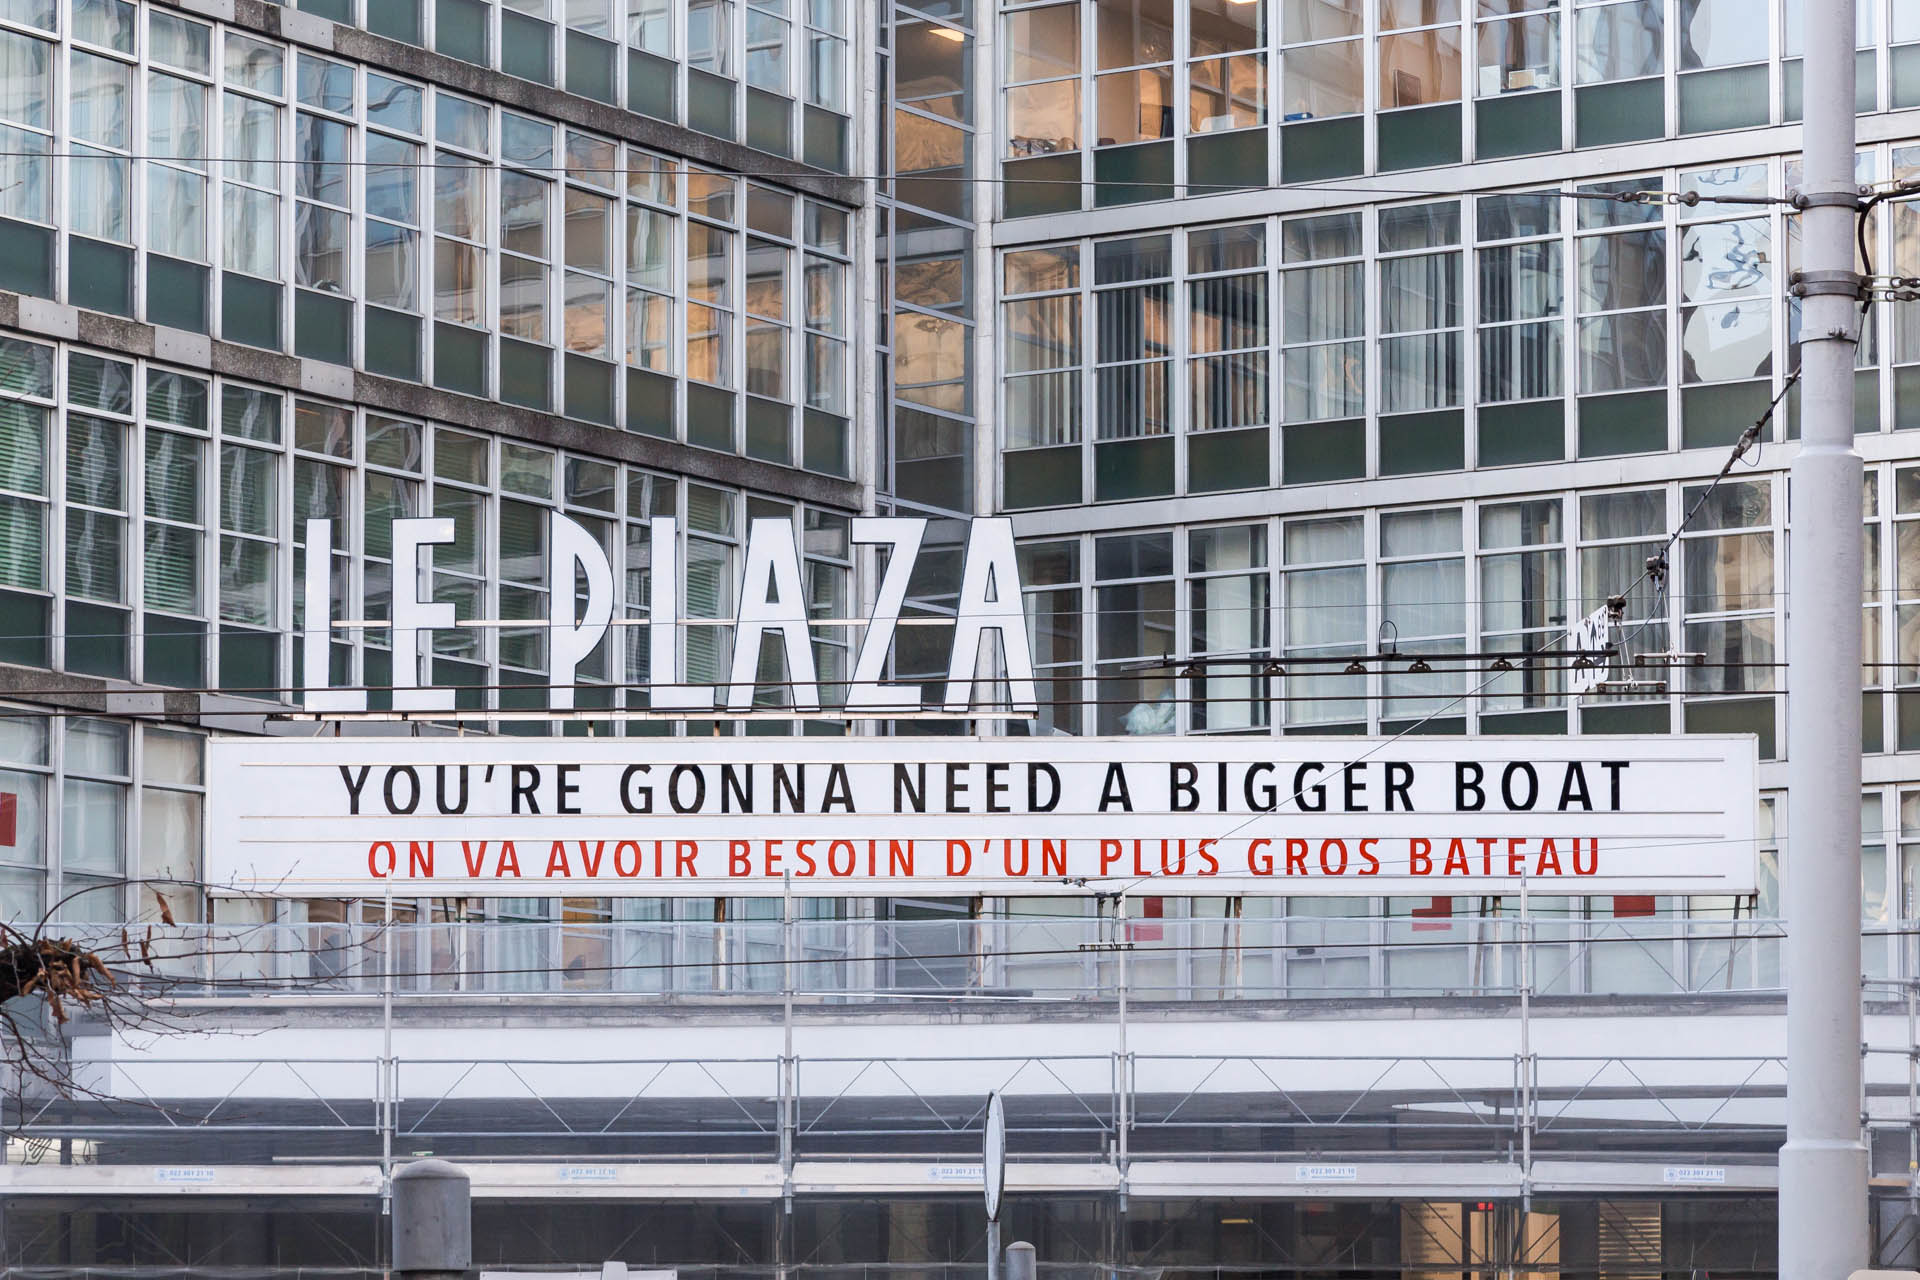 You're gonna need a bigger boat, enseigne du Plaza, Christian Robert-Tissot, photo Raphaelle Mueller